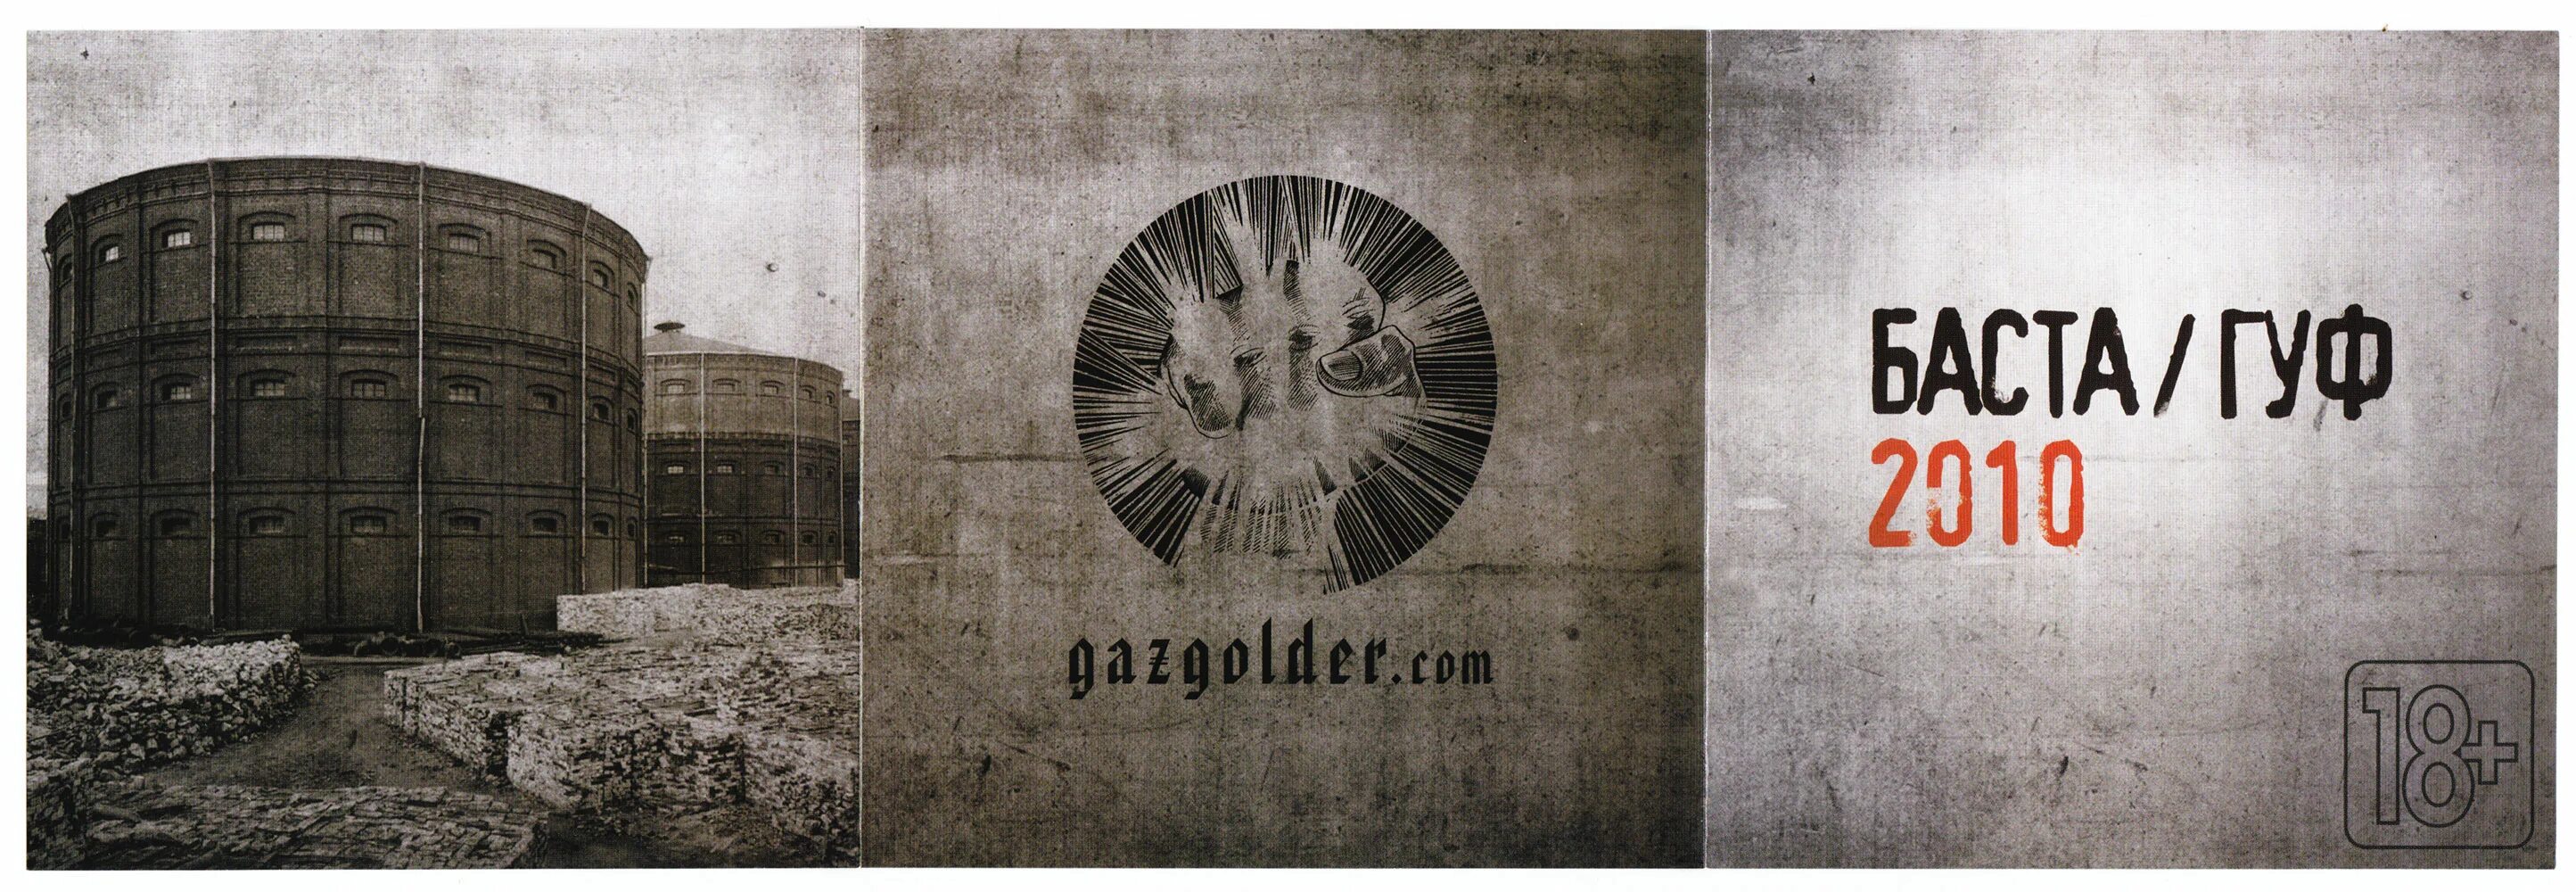 Баста про гуфа. Баста Гуф обложка альбома. Баста Гуф 2010. Баста и Гуф. Газгольдер лейбл.